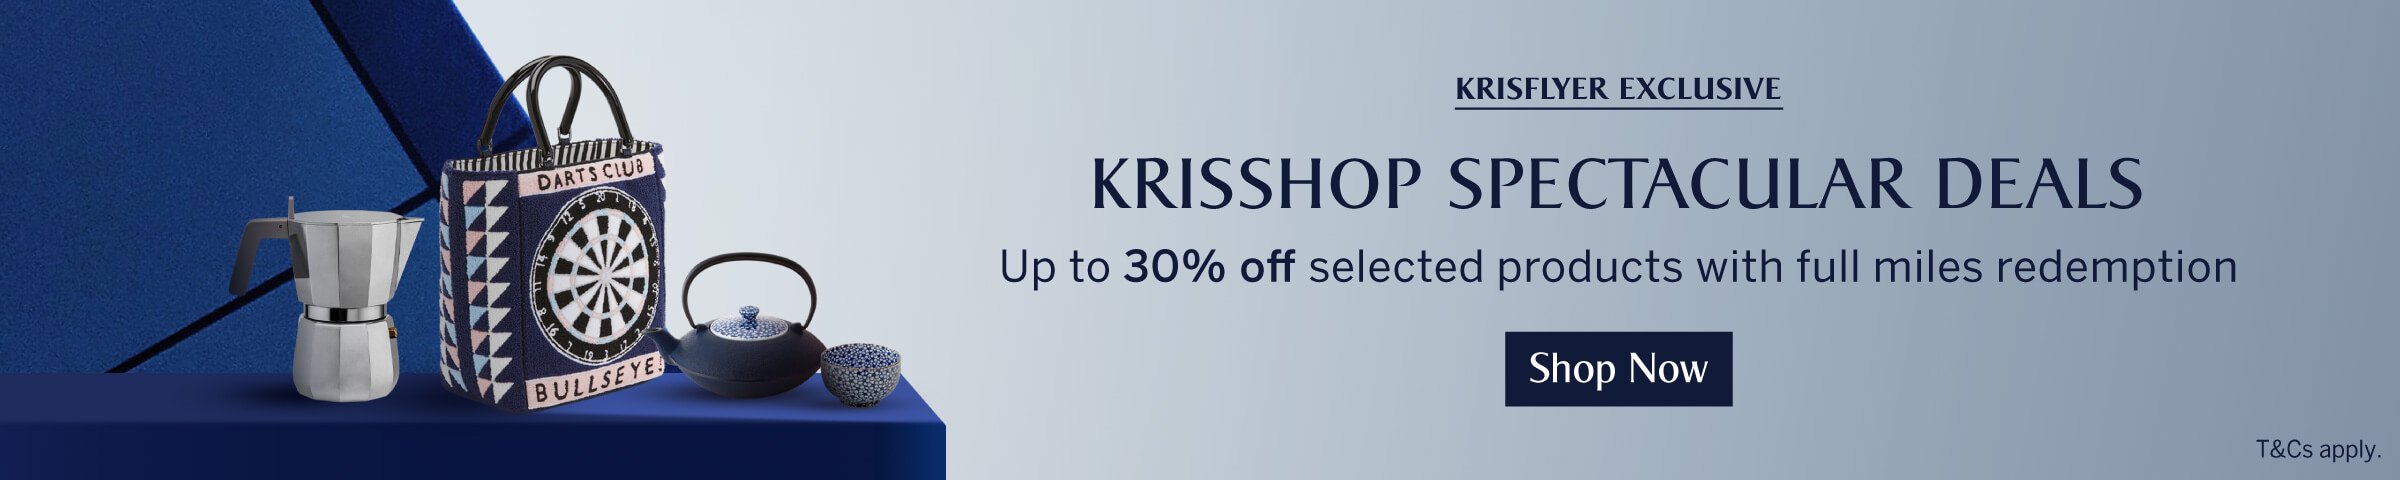 KrisShop Spectacular Deals - Up to 30% off leading global brands